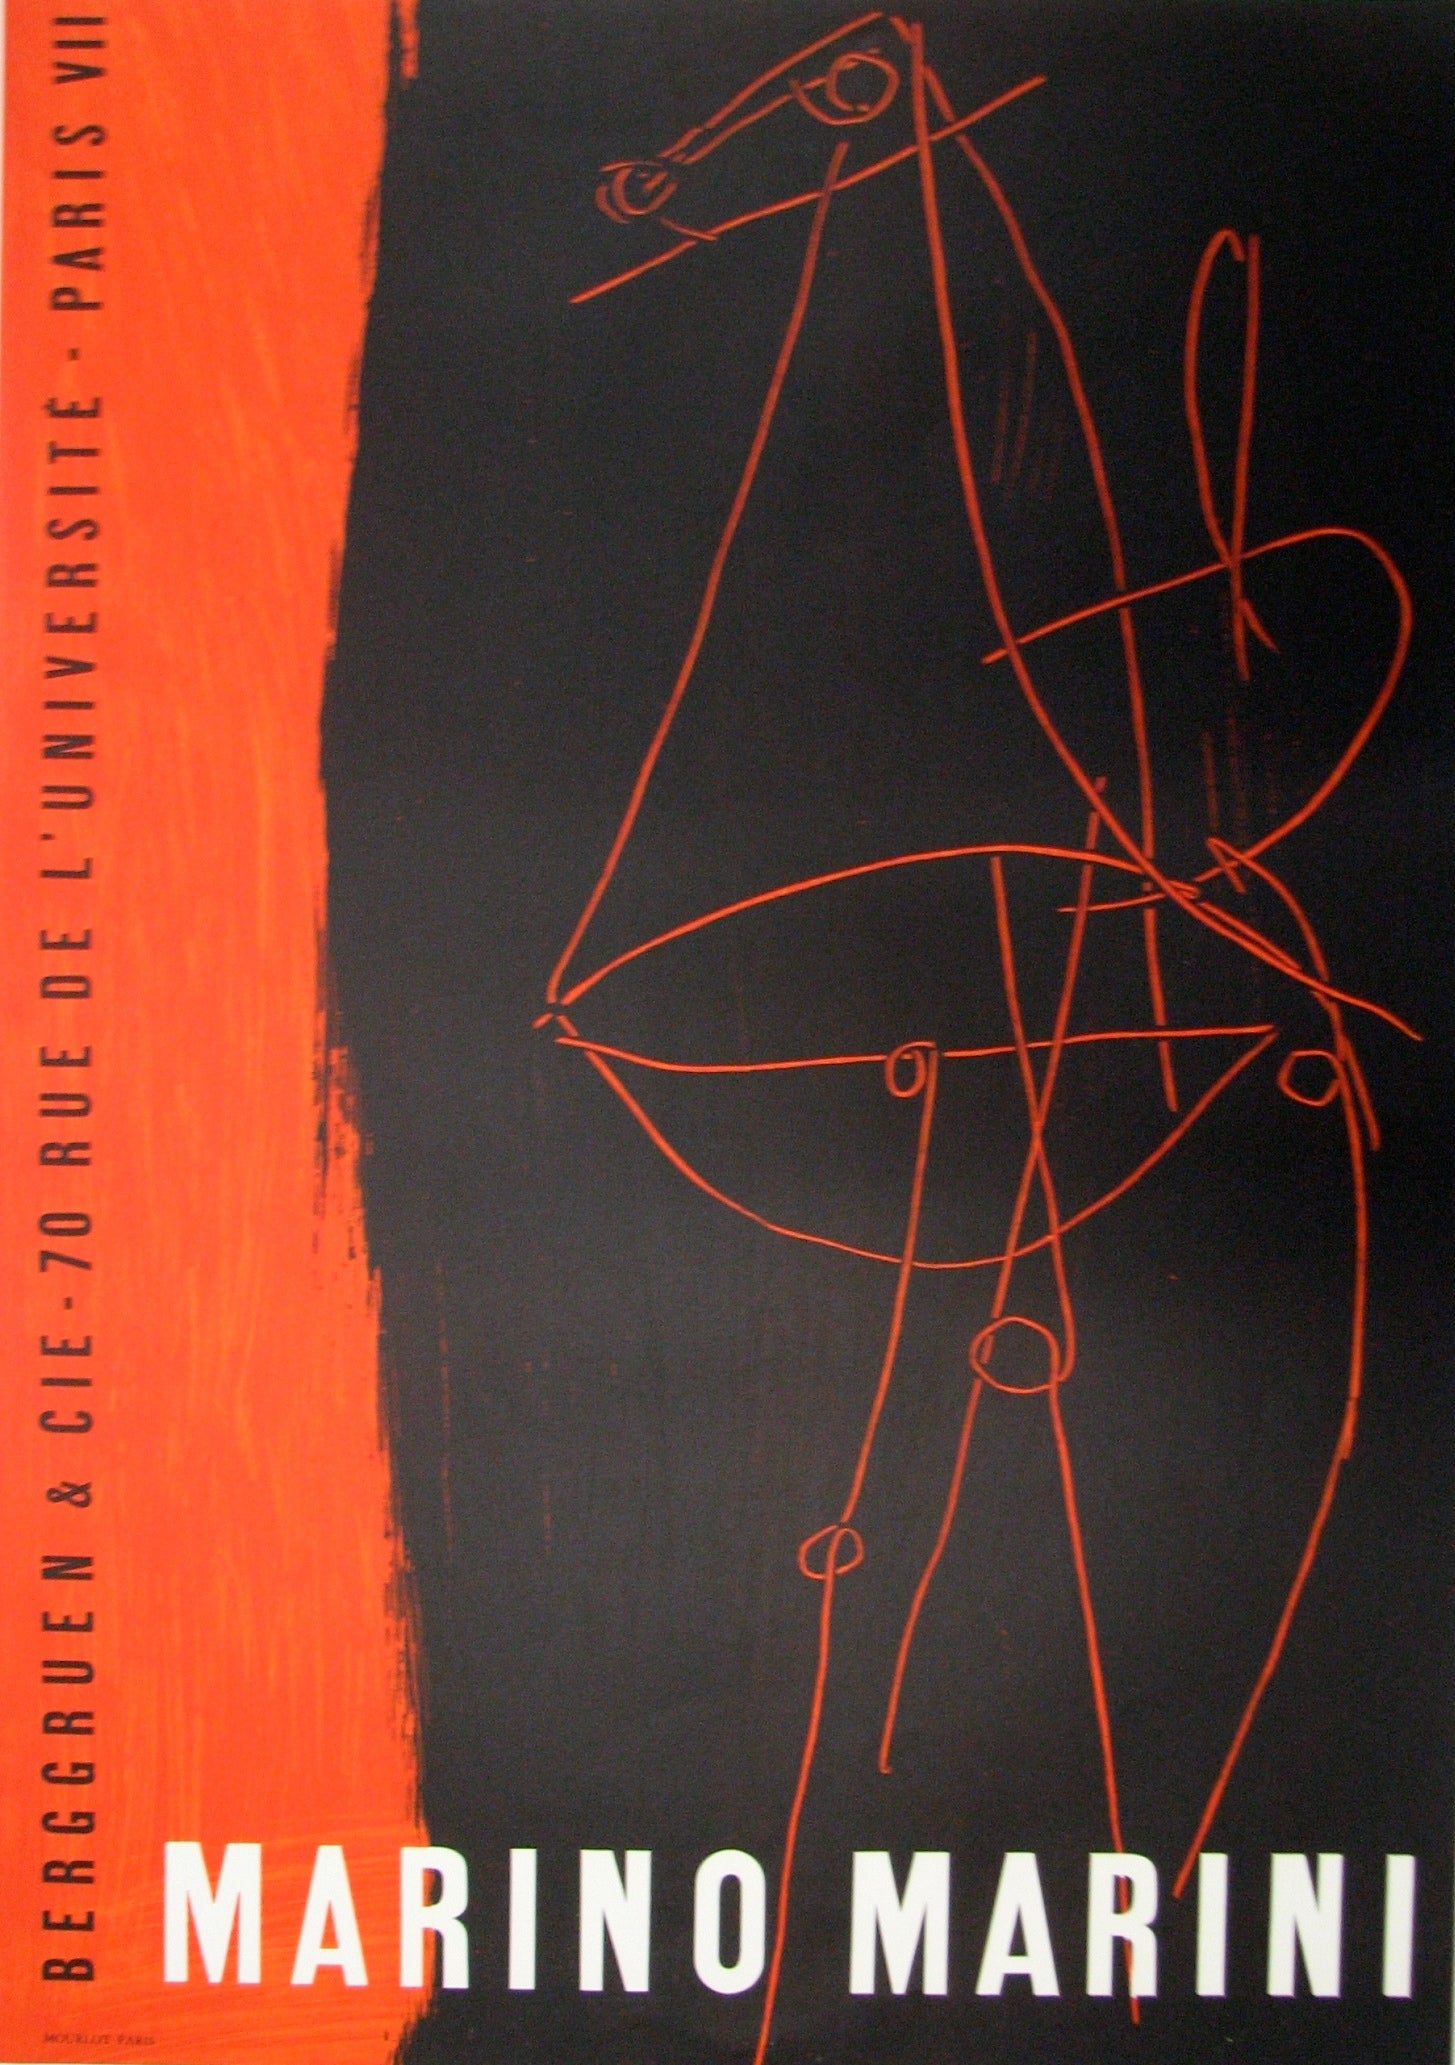 Composition - BERGGRUEN AND CIE, 1955 by Marino Marini, 1955 - Mourlot Editions - Fine_Art - Poster - Lithograph - Wall Art - Vintage - Prints - Original